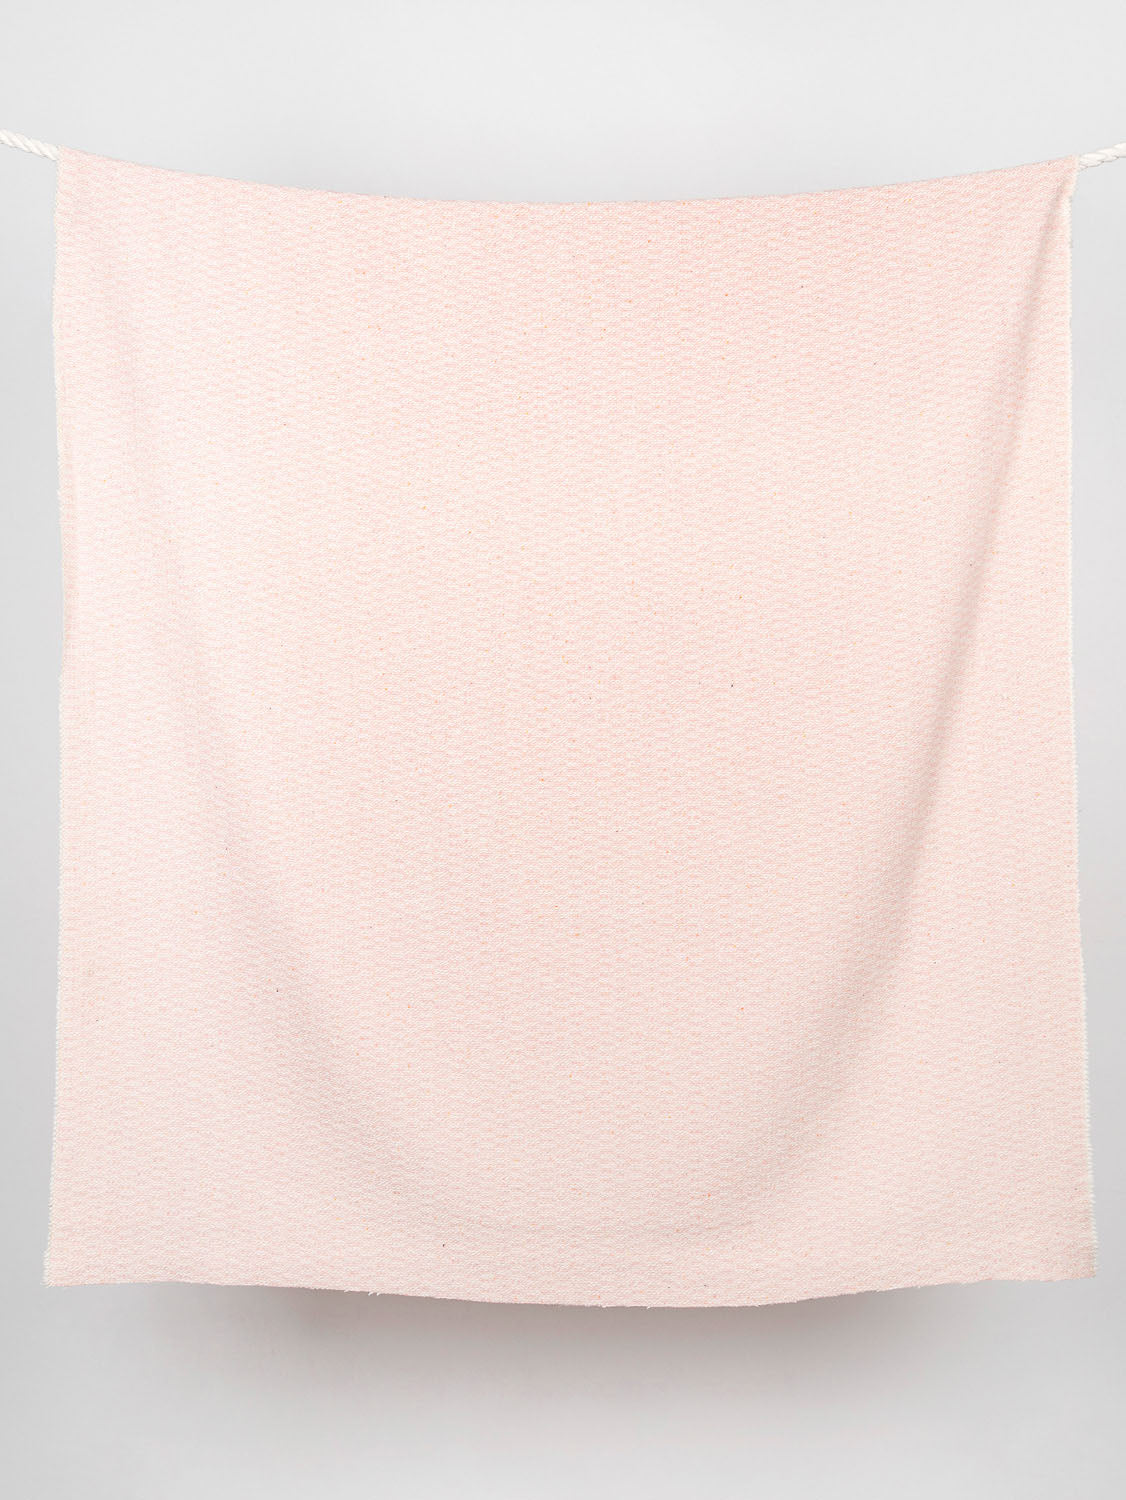 Rustic Wool Blend Bouclé Deadstock - Rose + Cream | Core Fabrics